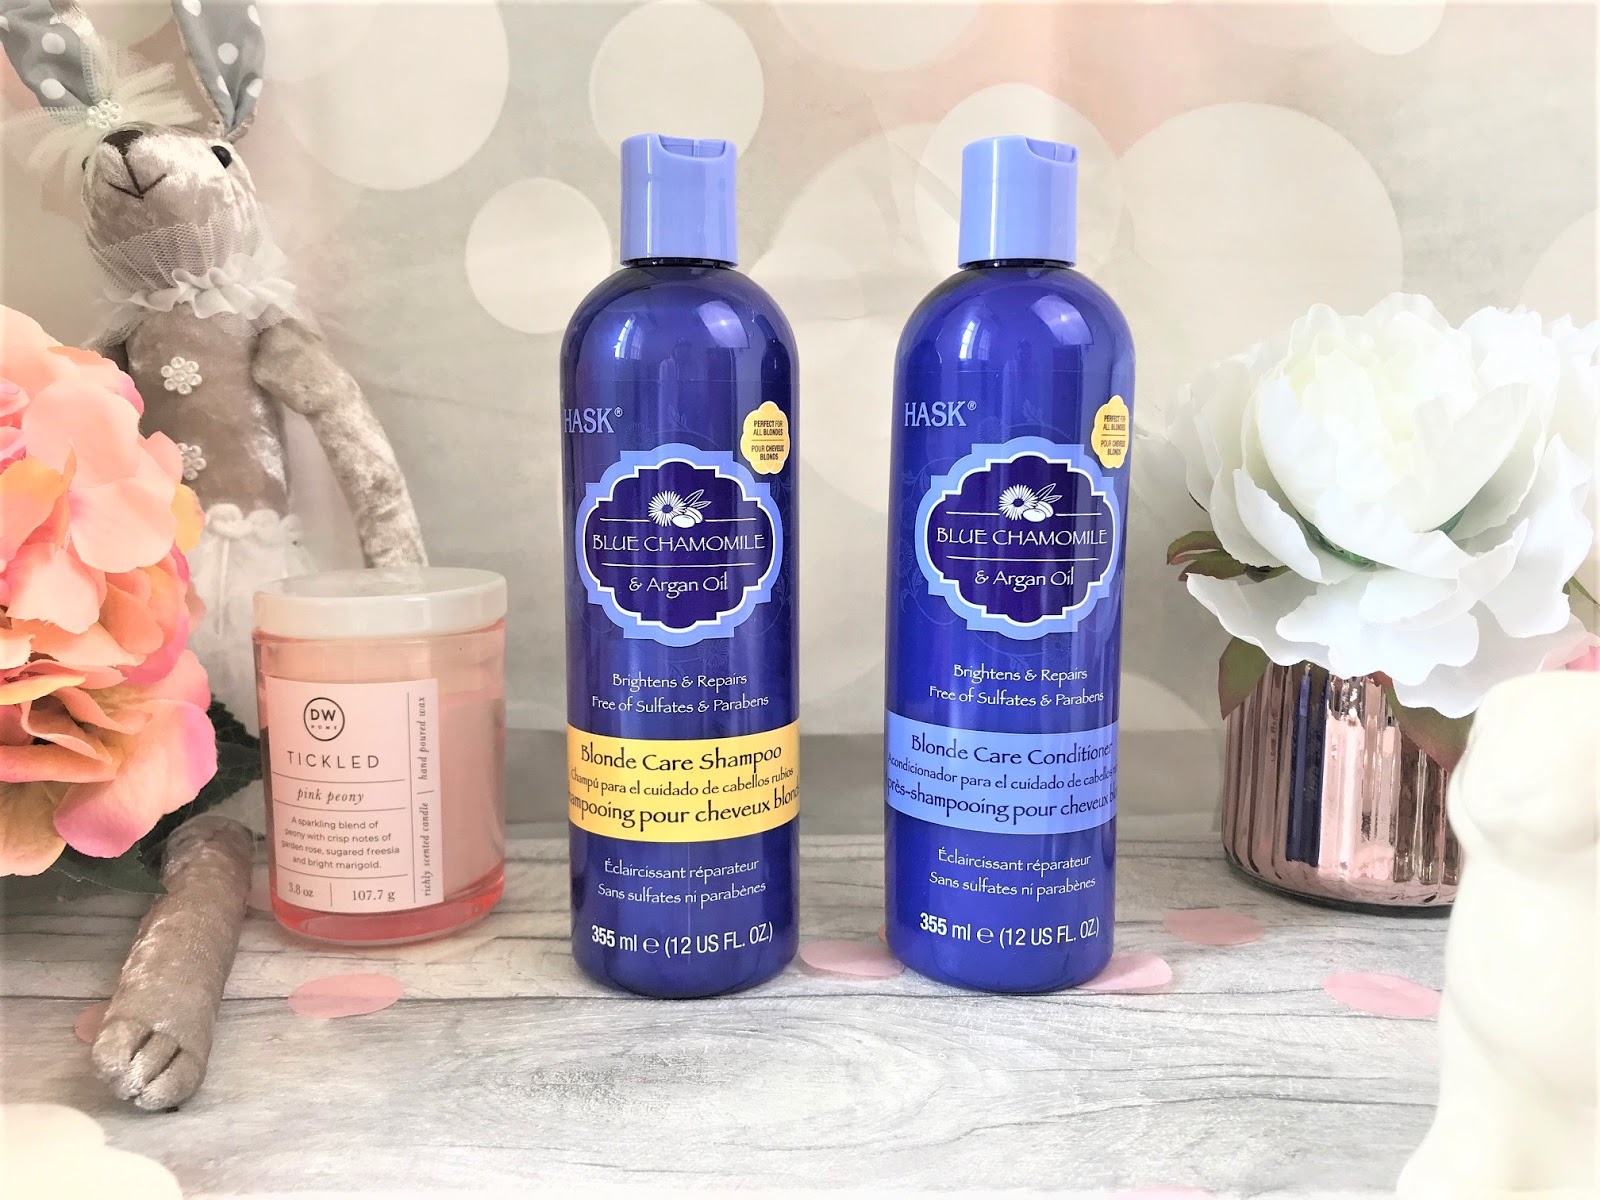 Hask Blue Chamomile & Argan Oil Blonde Care Shampoo - wide 4